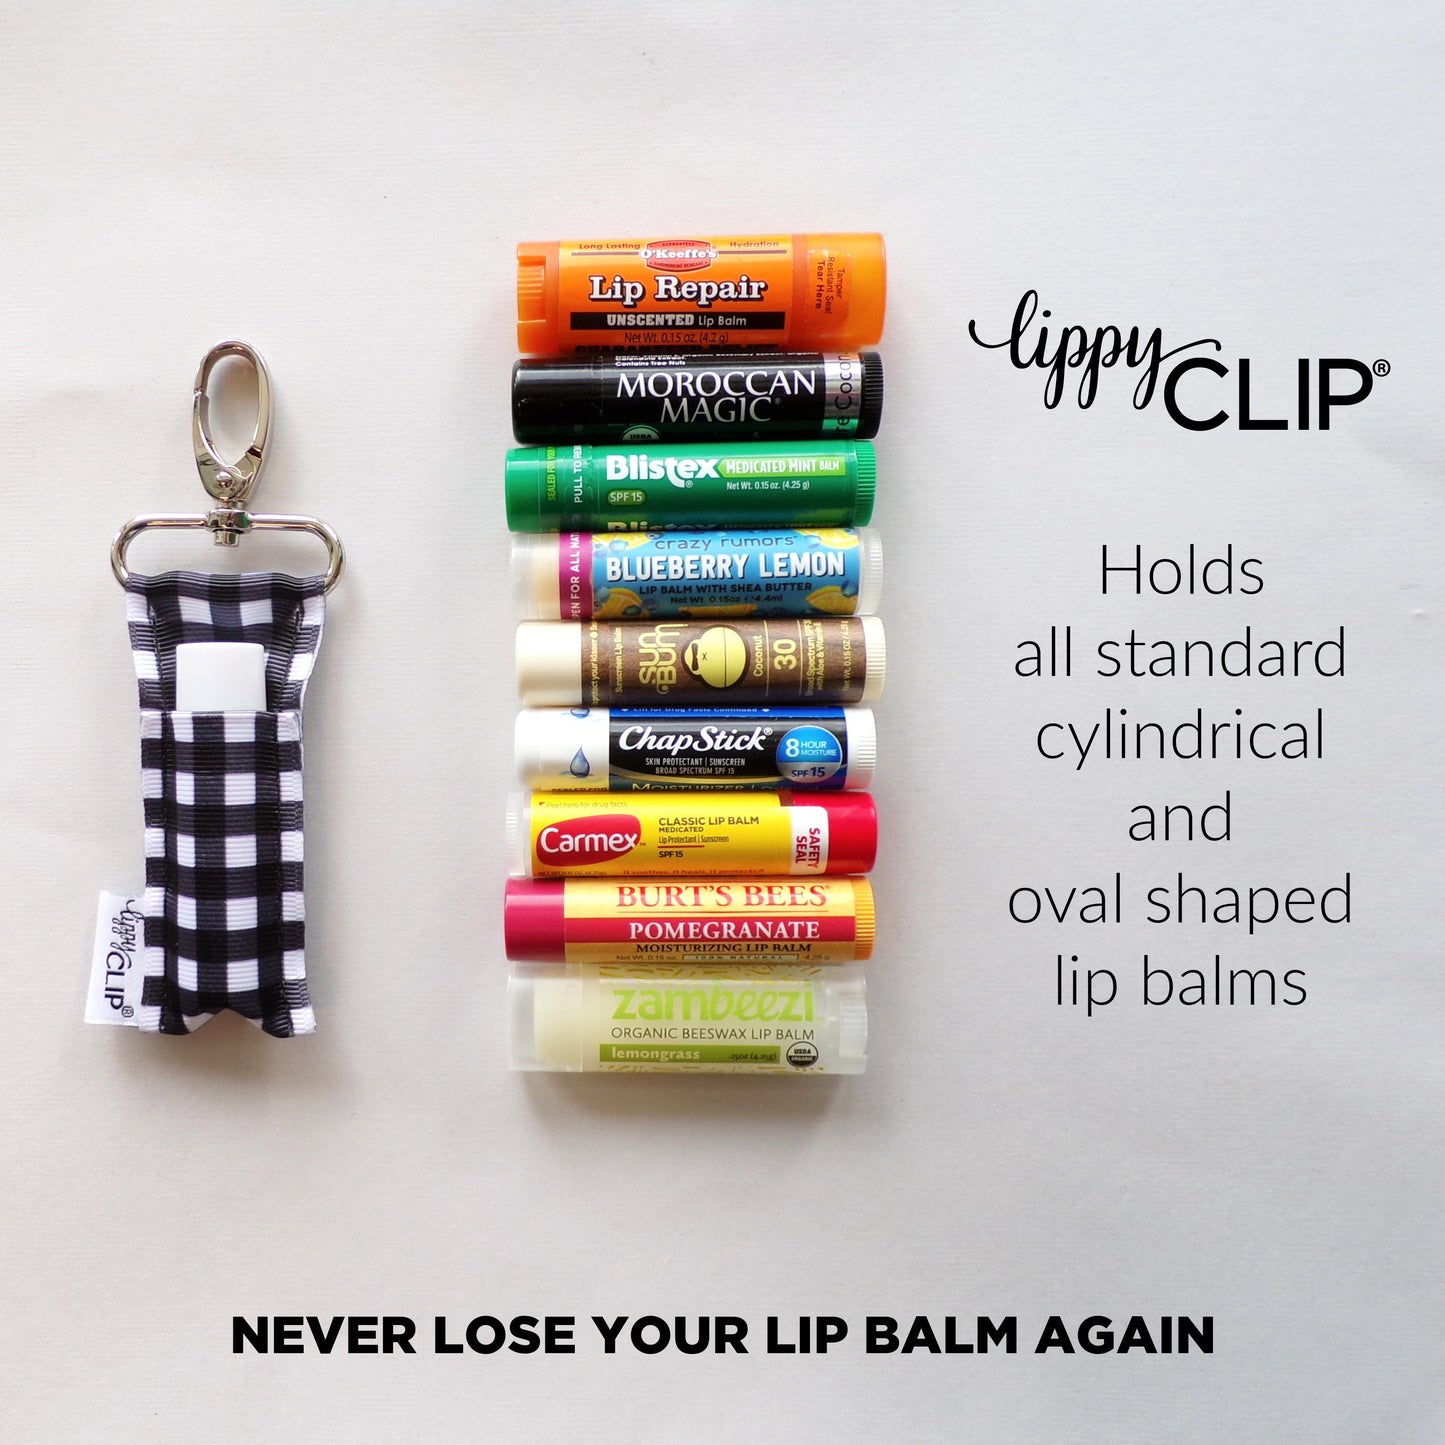 Thin Blue Line LippyClip® Lip Balm Holder